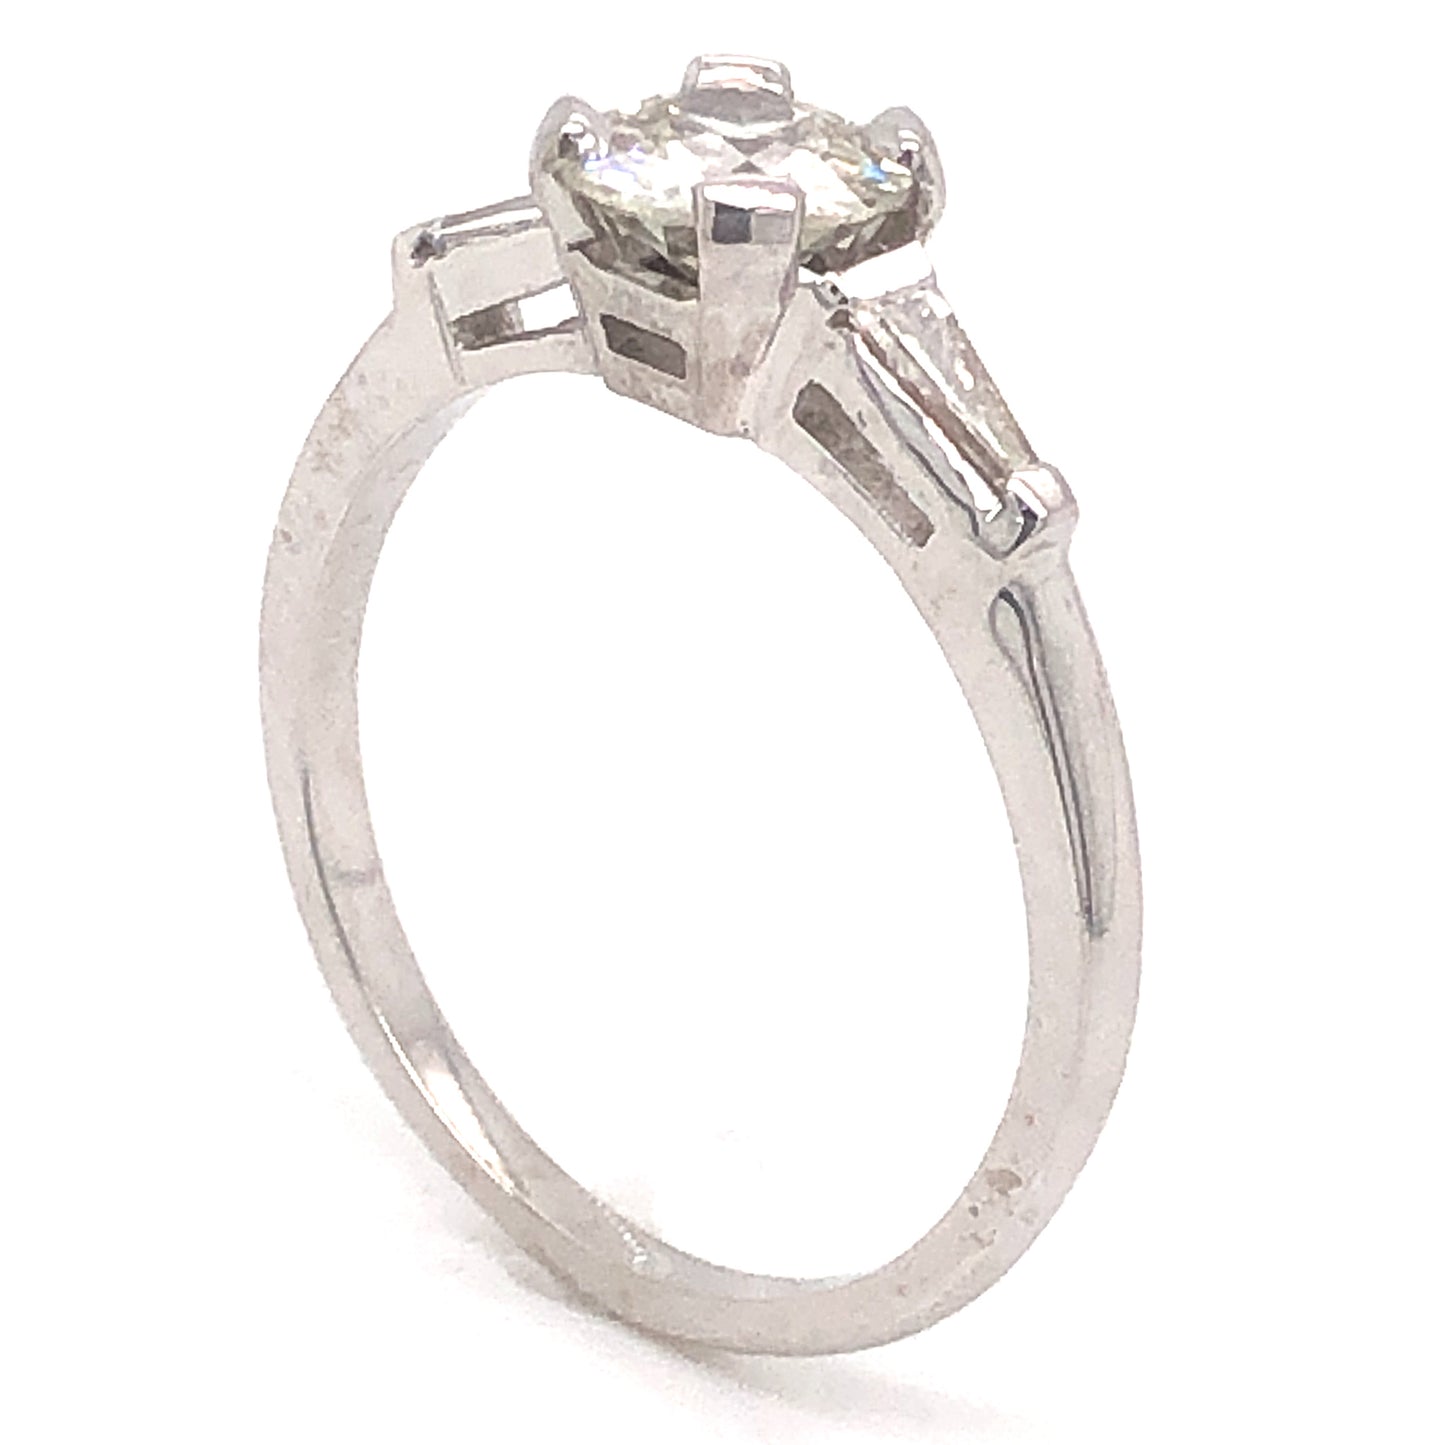 .77 Vintage Art Deco Diamond Engagement Ring in 14k White Gold